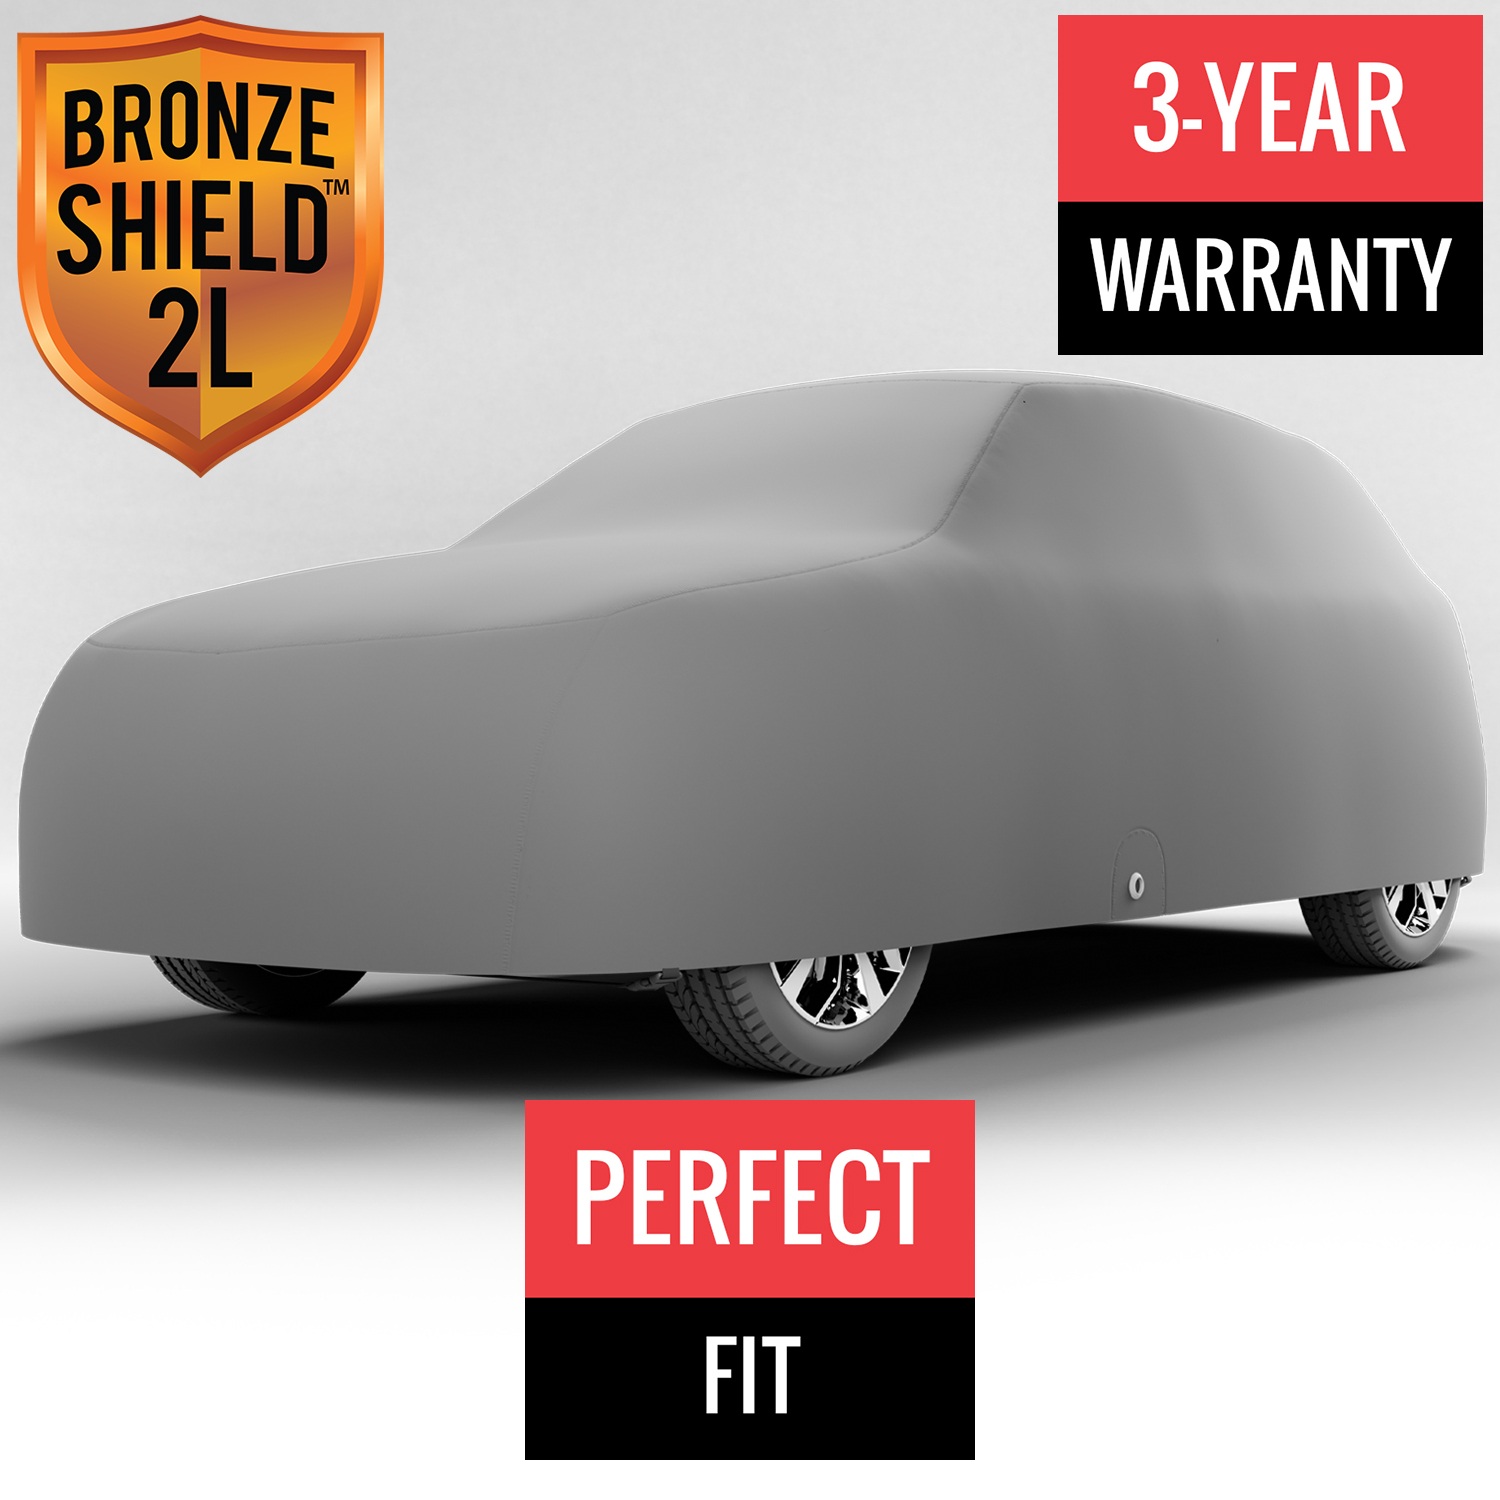 Bronze Shield 2L - Car Cover for Scion xB 2010 Wagon 4-Door